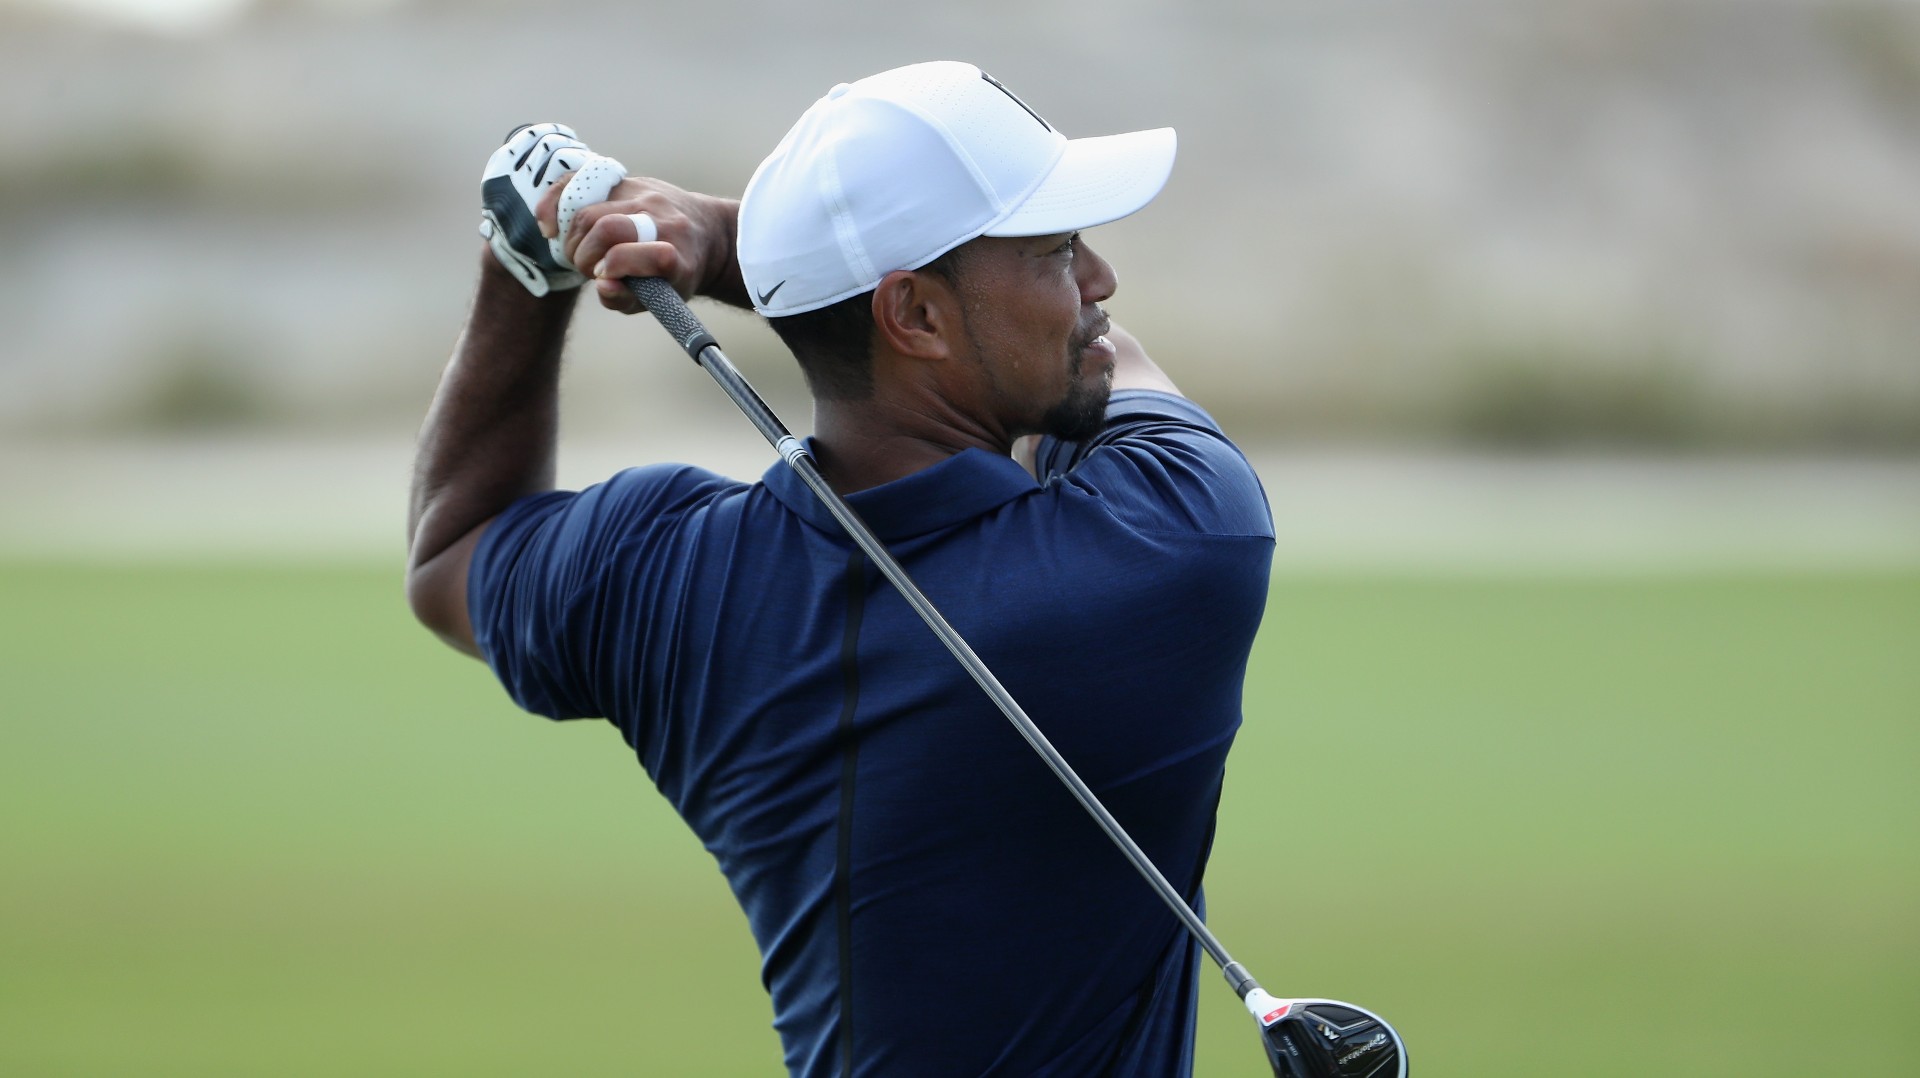 Tiger Woods dialed in, shoots bogey-free 65 at Hero World Challenge ksdk